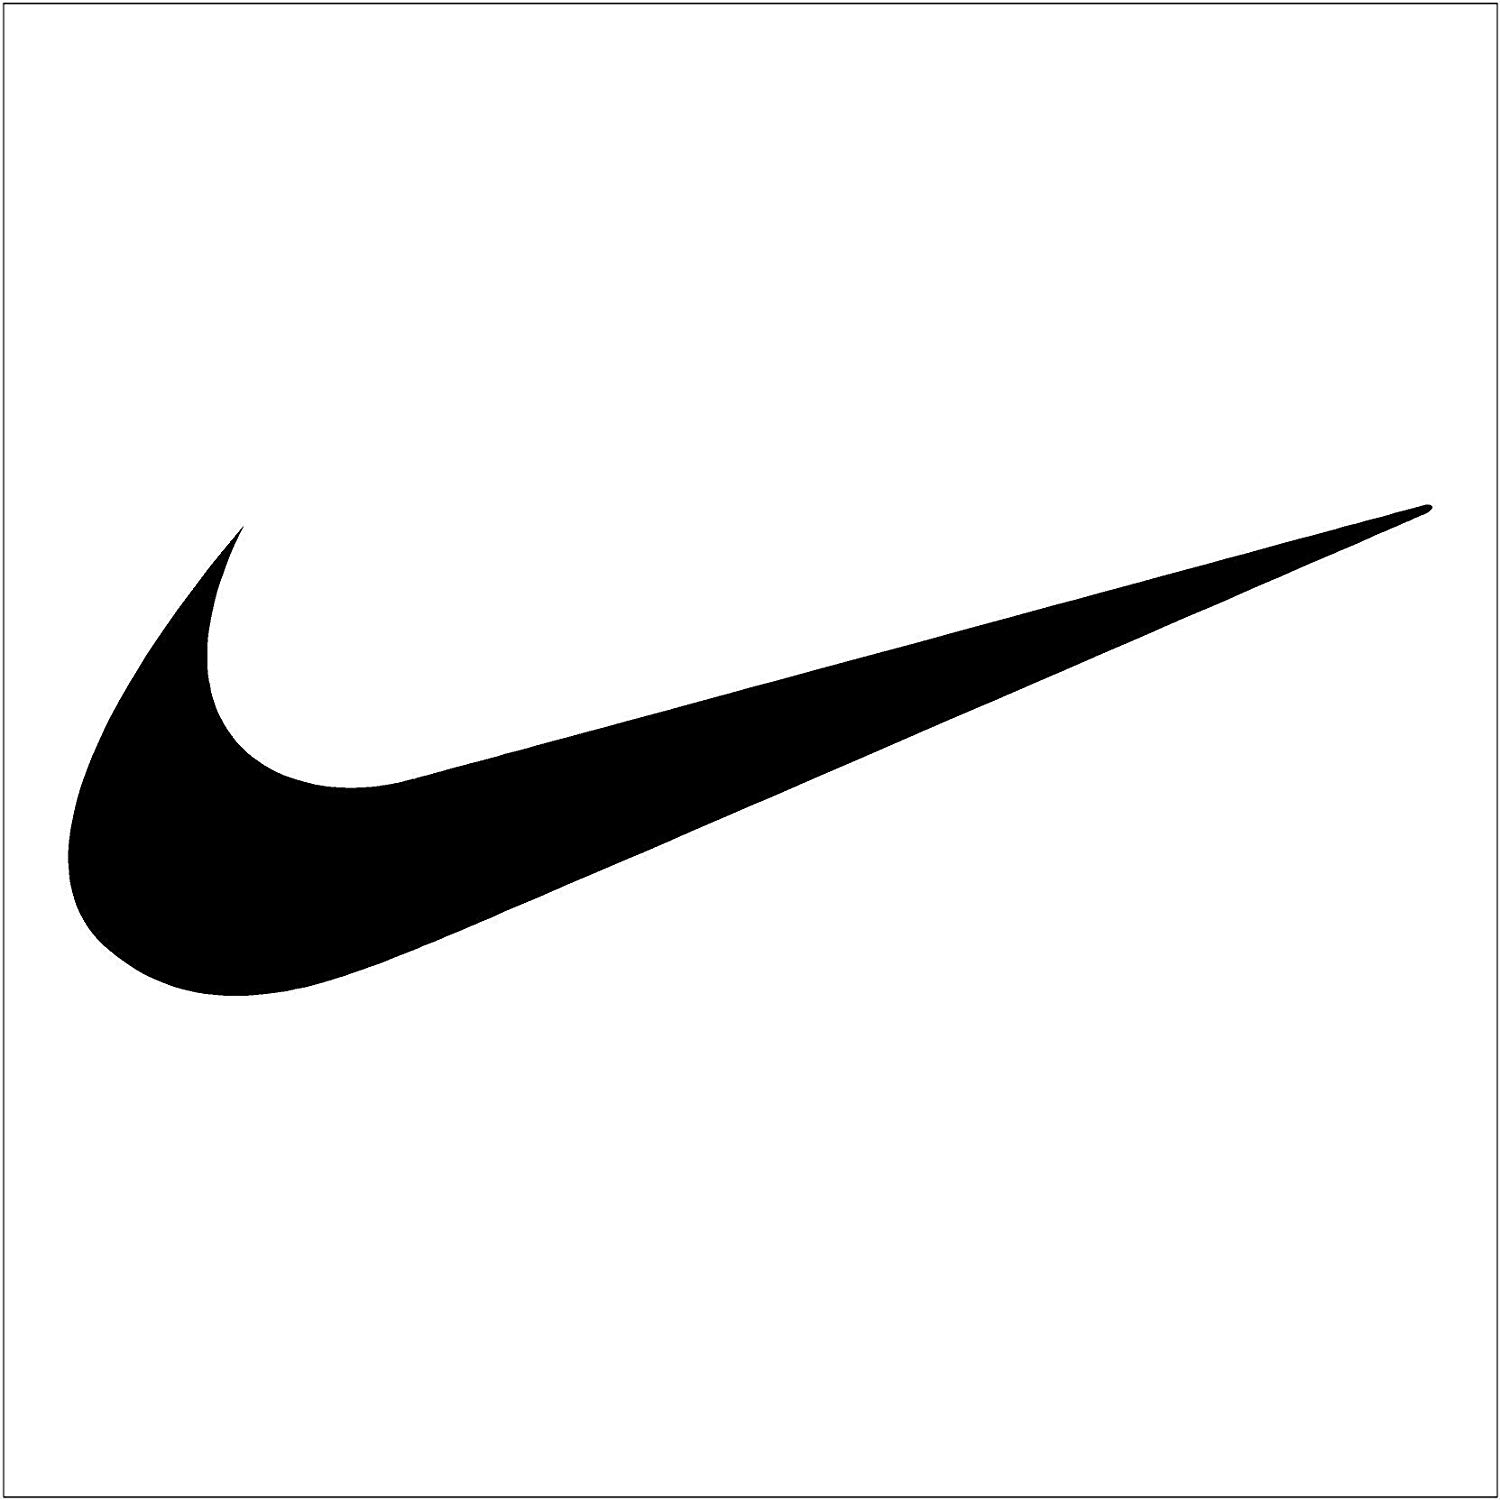 Stop Nike logo's - Petities.com